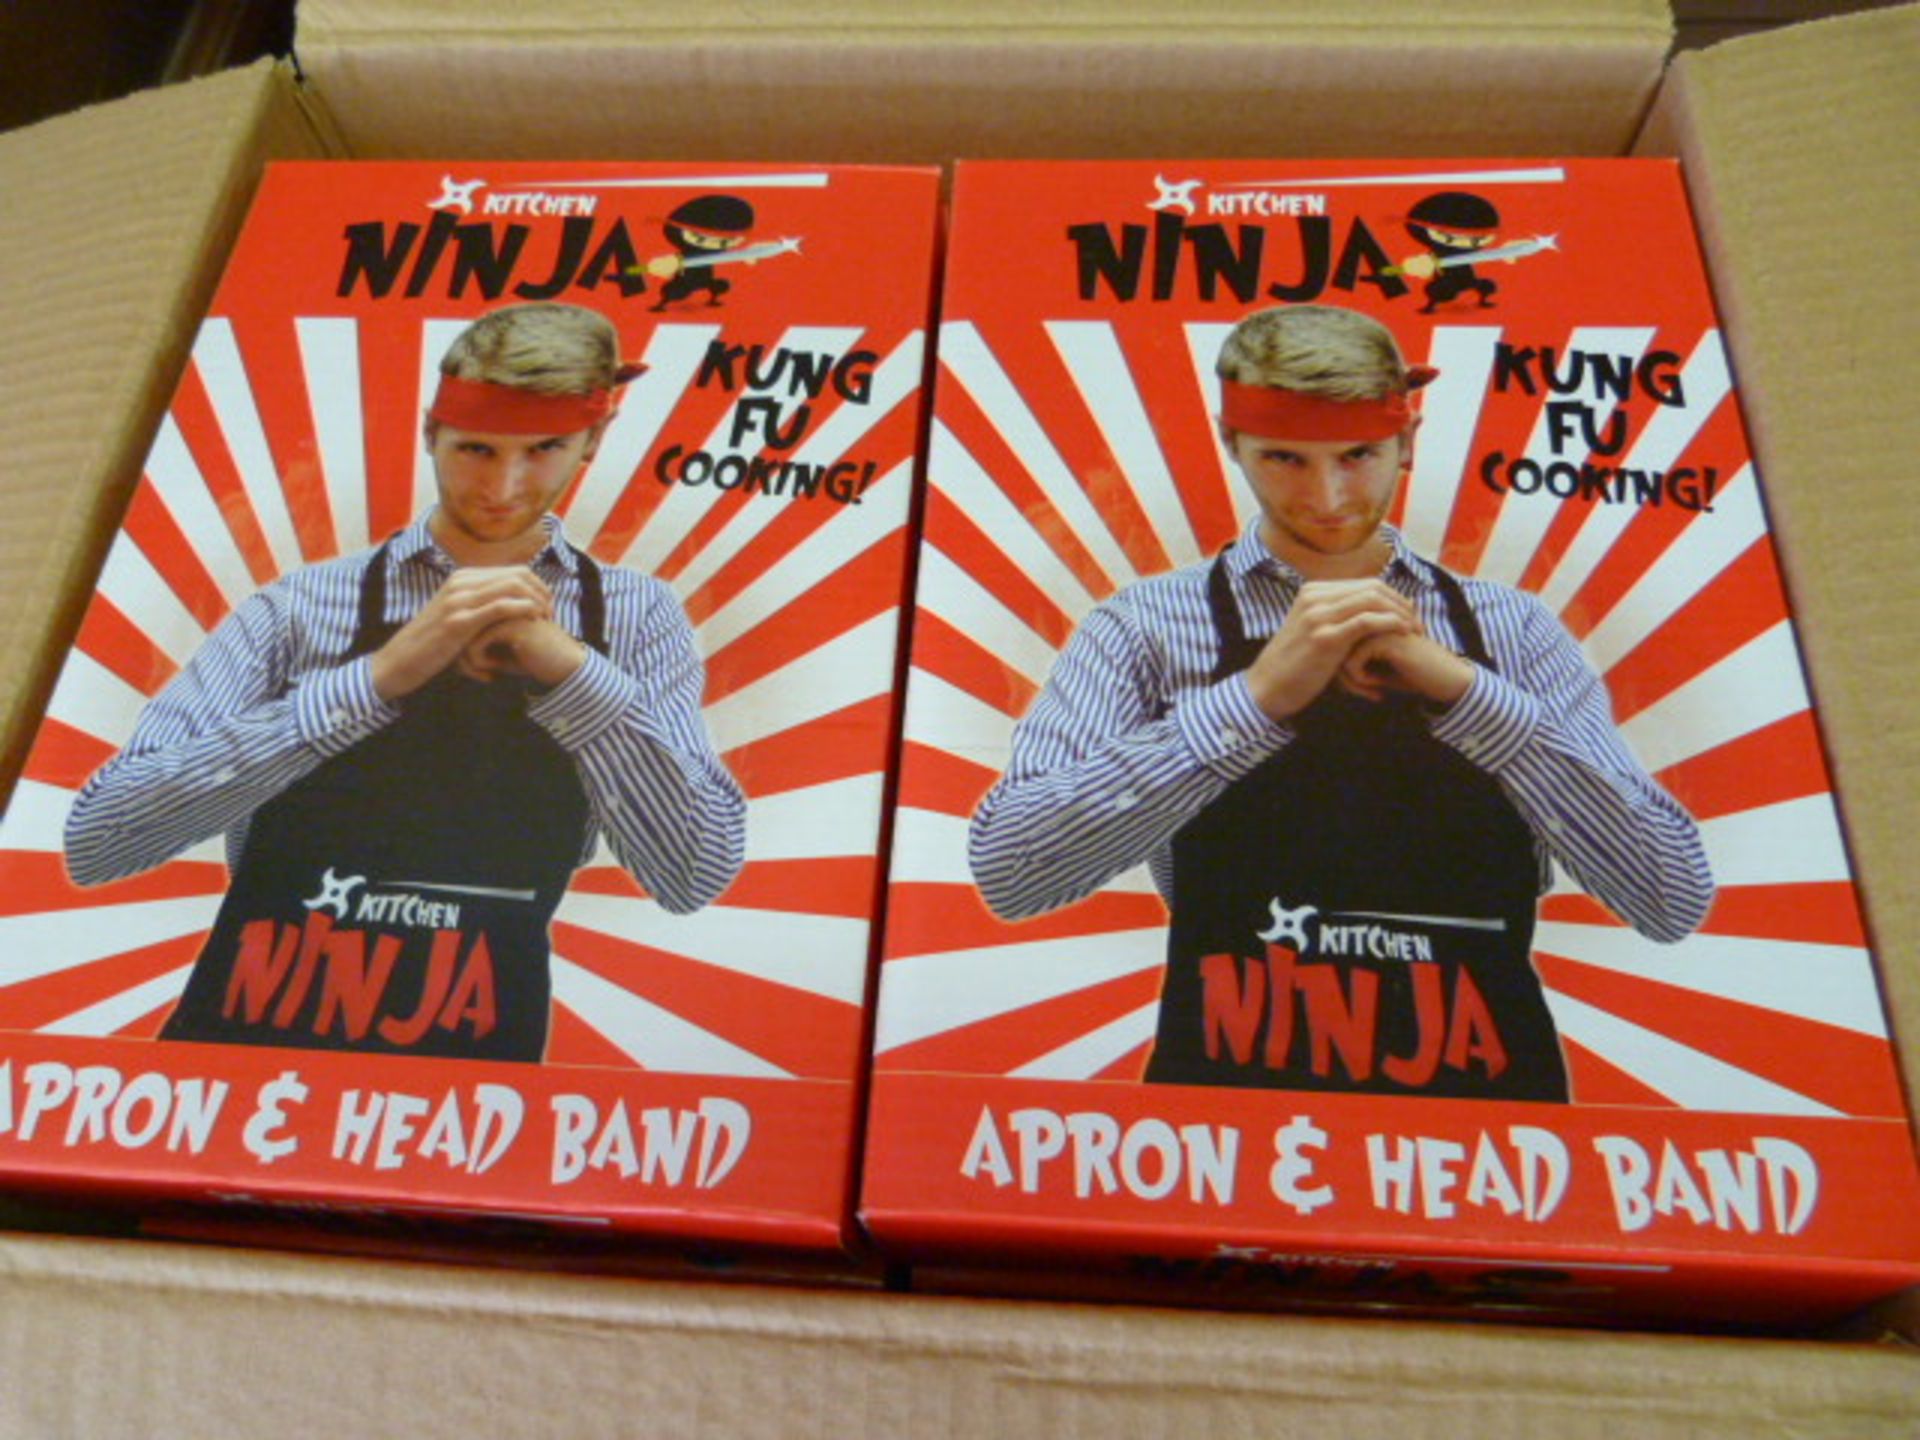 *Box of 12 Kitchen Ninja Aprons and Headbands